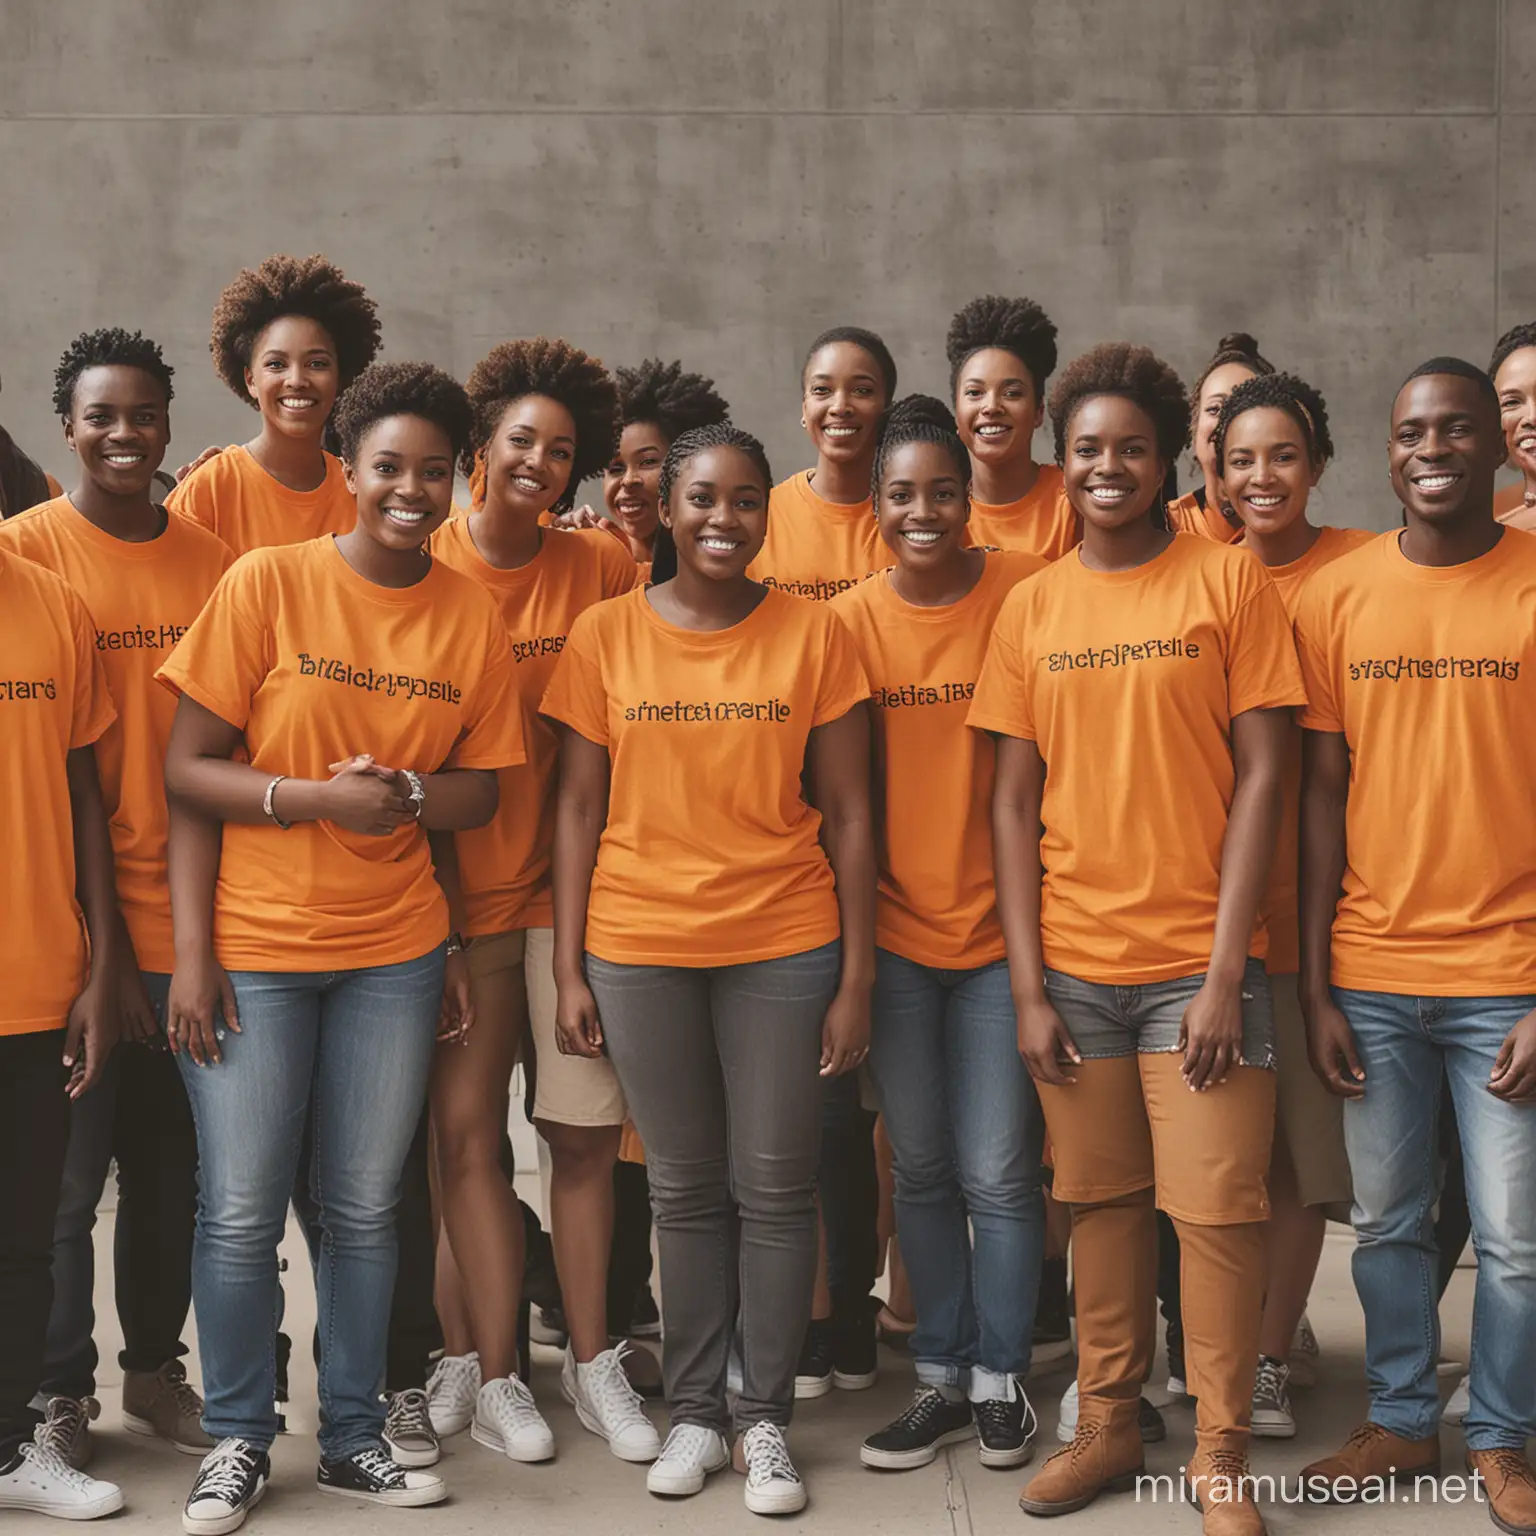 Joyful Group in Vibrant Orange Shirts